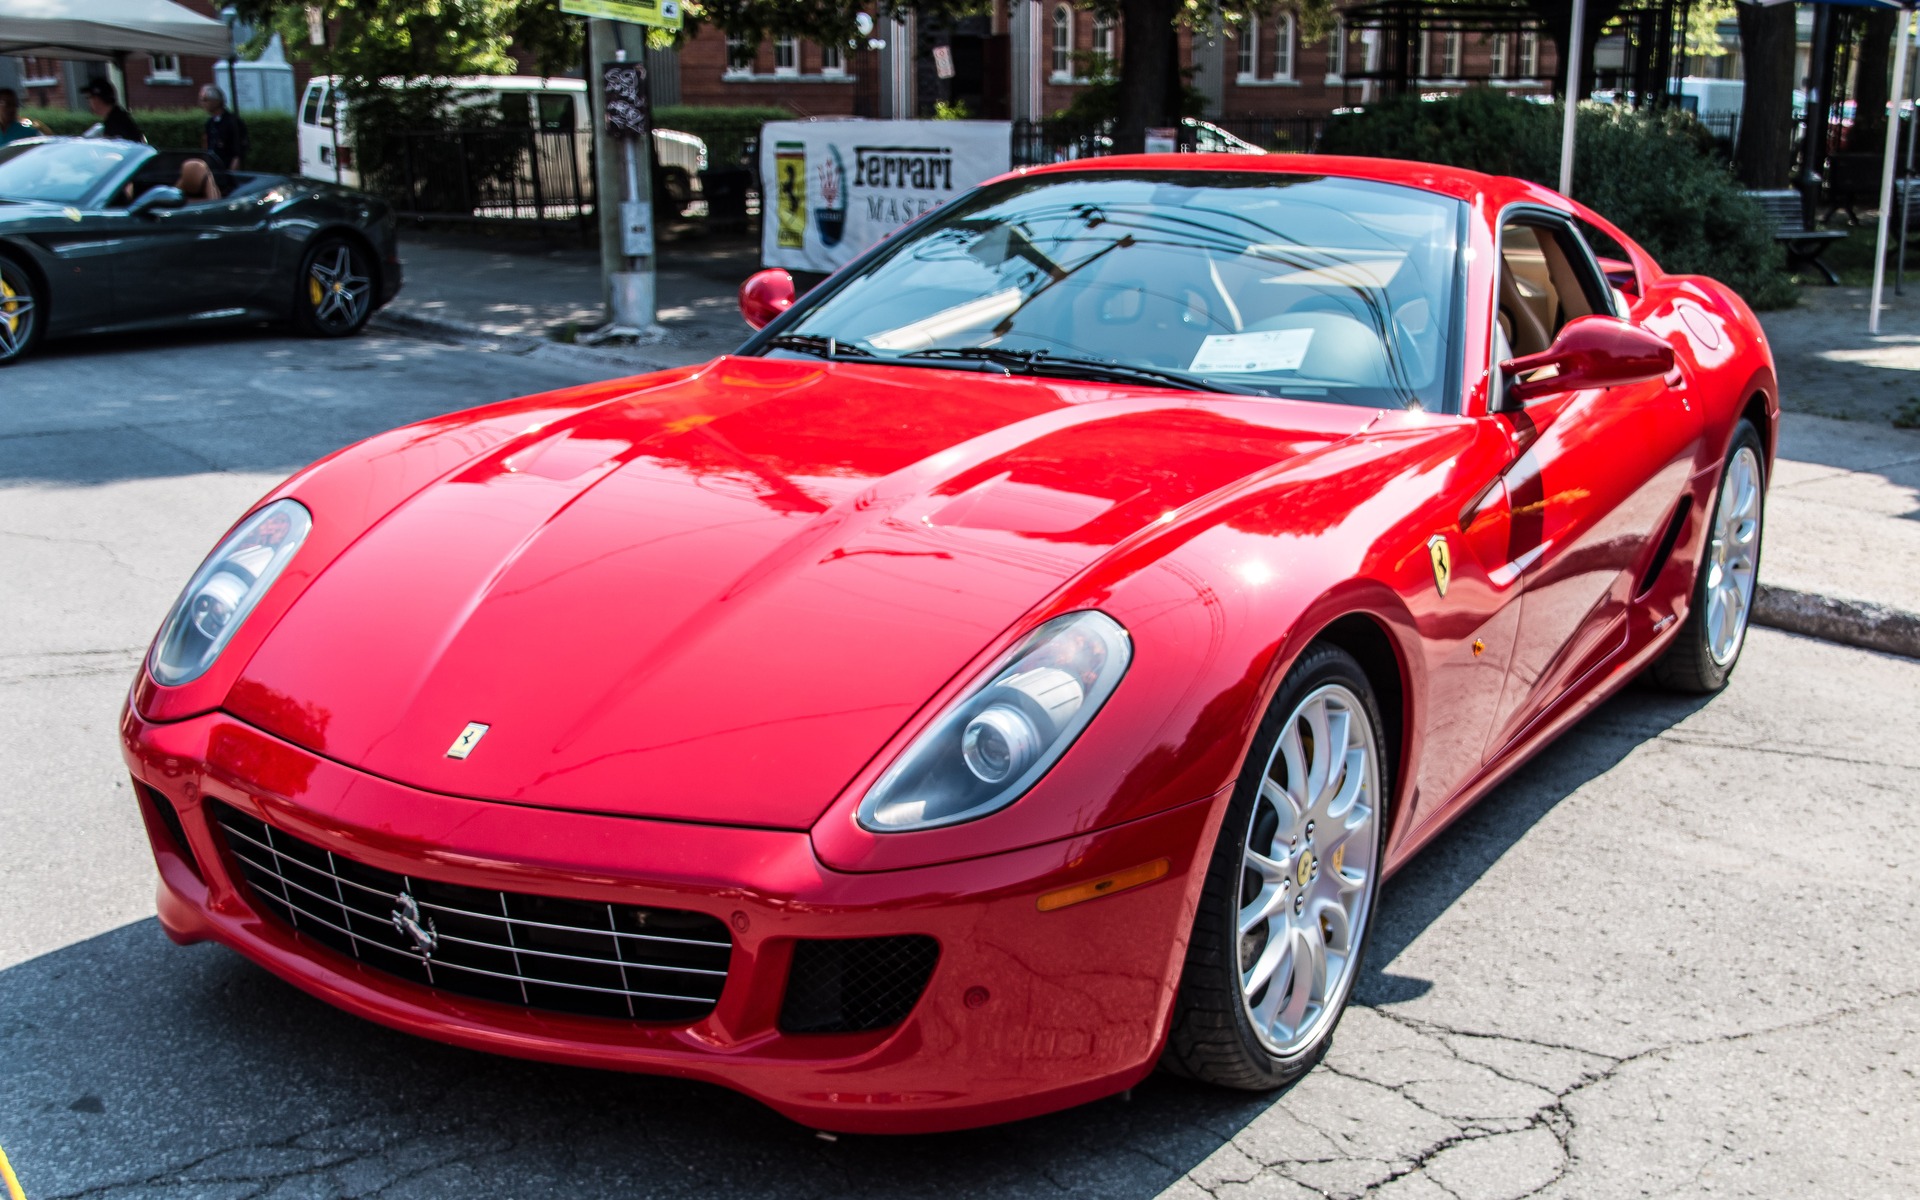 Des Ferrari dans les rues de Montréal lors du Grand Prix 2015